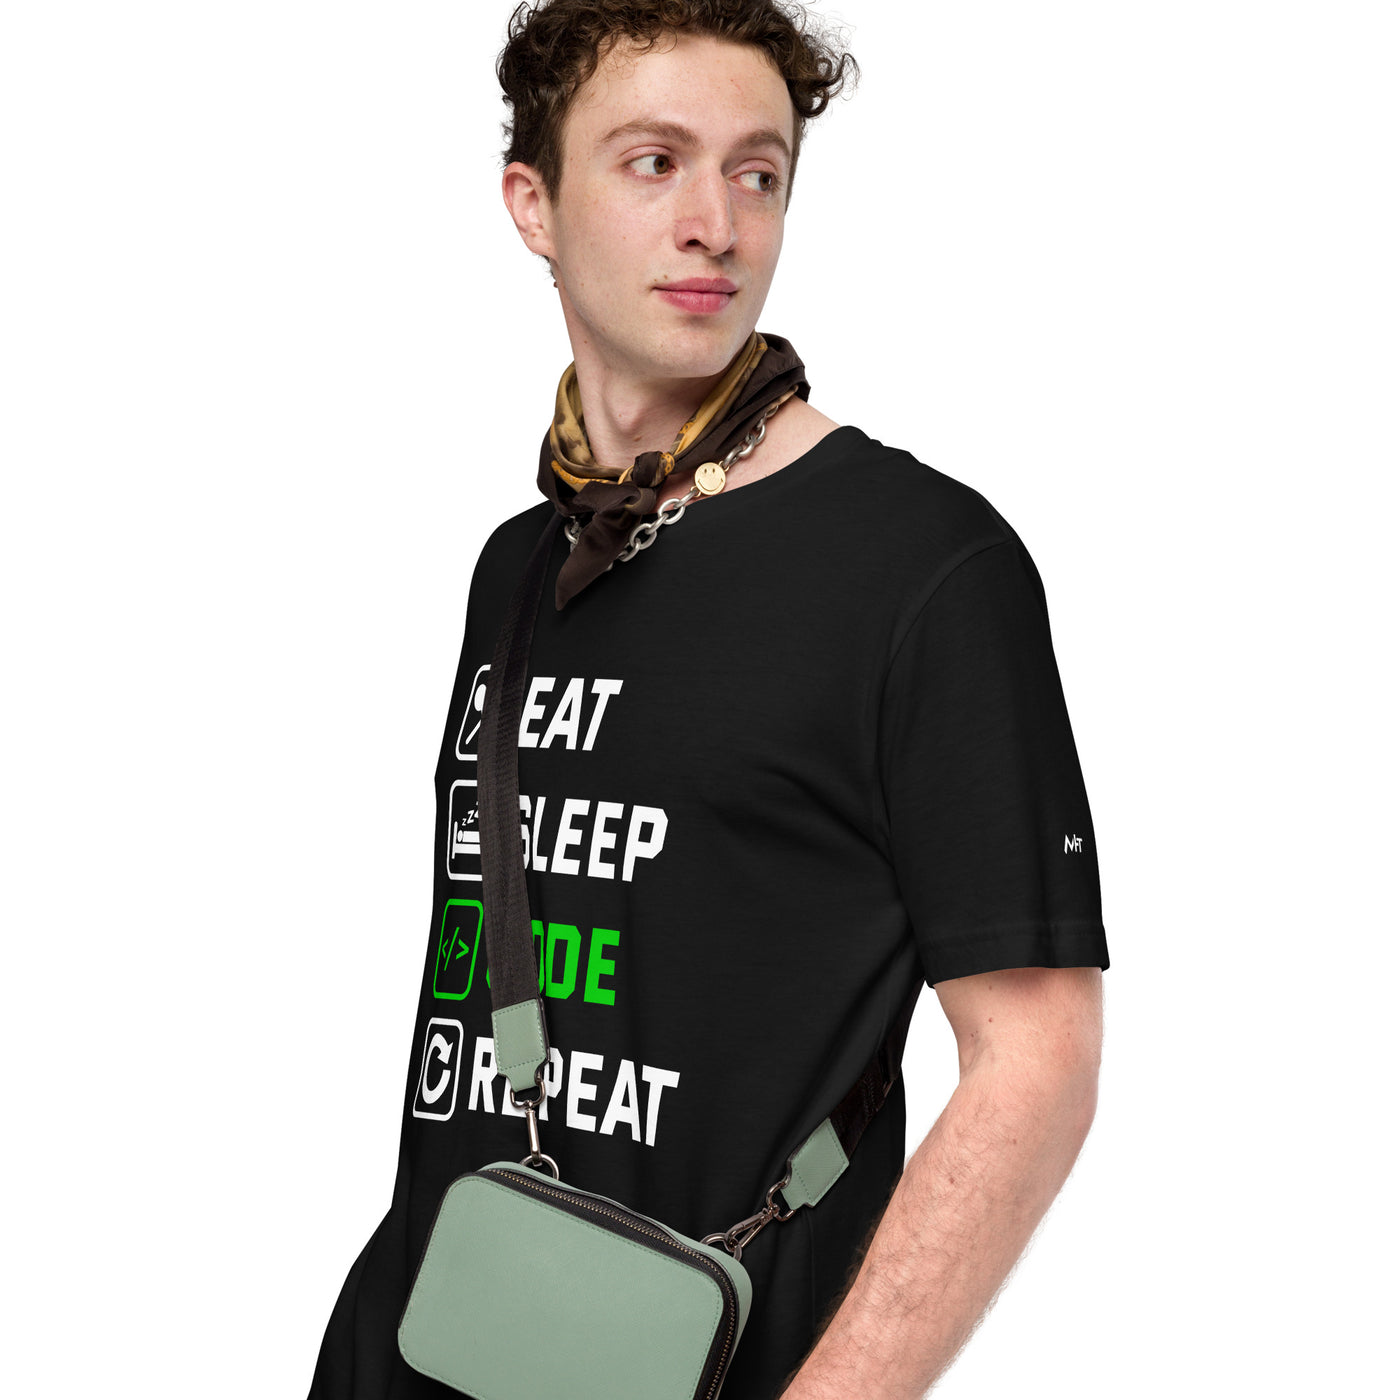 Eat Sleep Code Repeat (Mahfuz) Unisex t-shirt